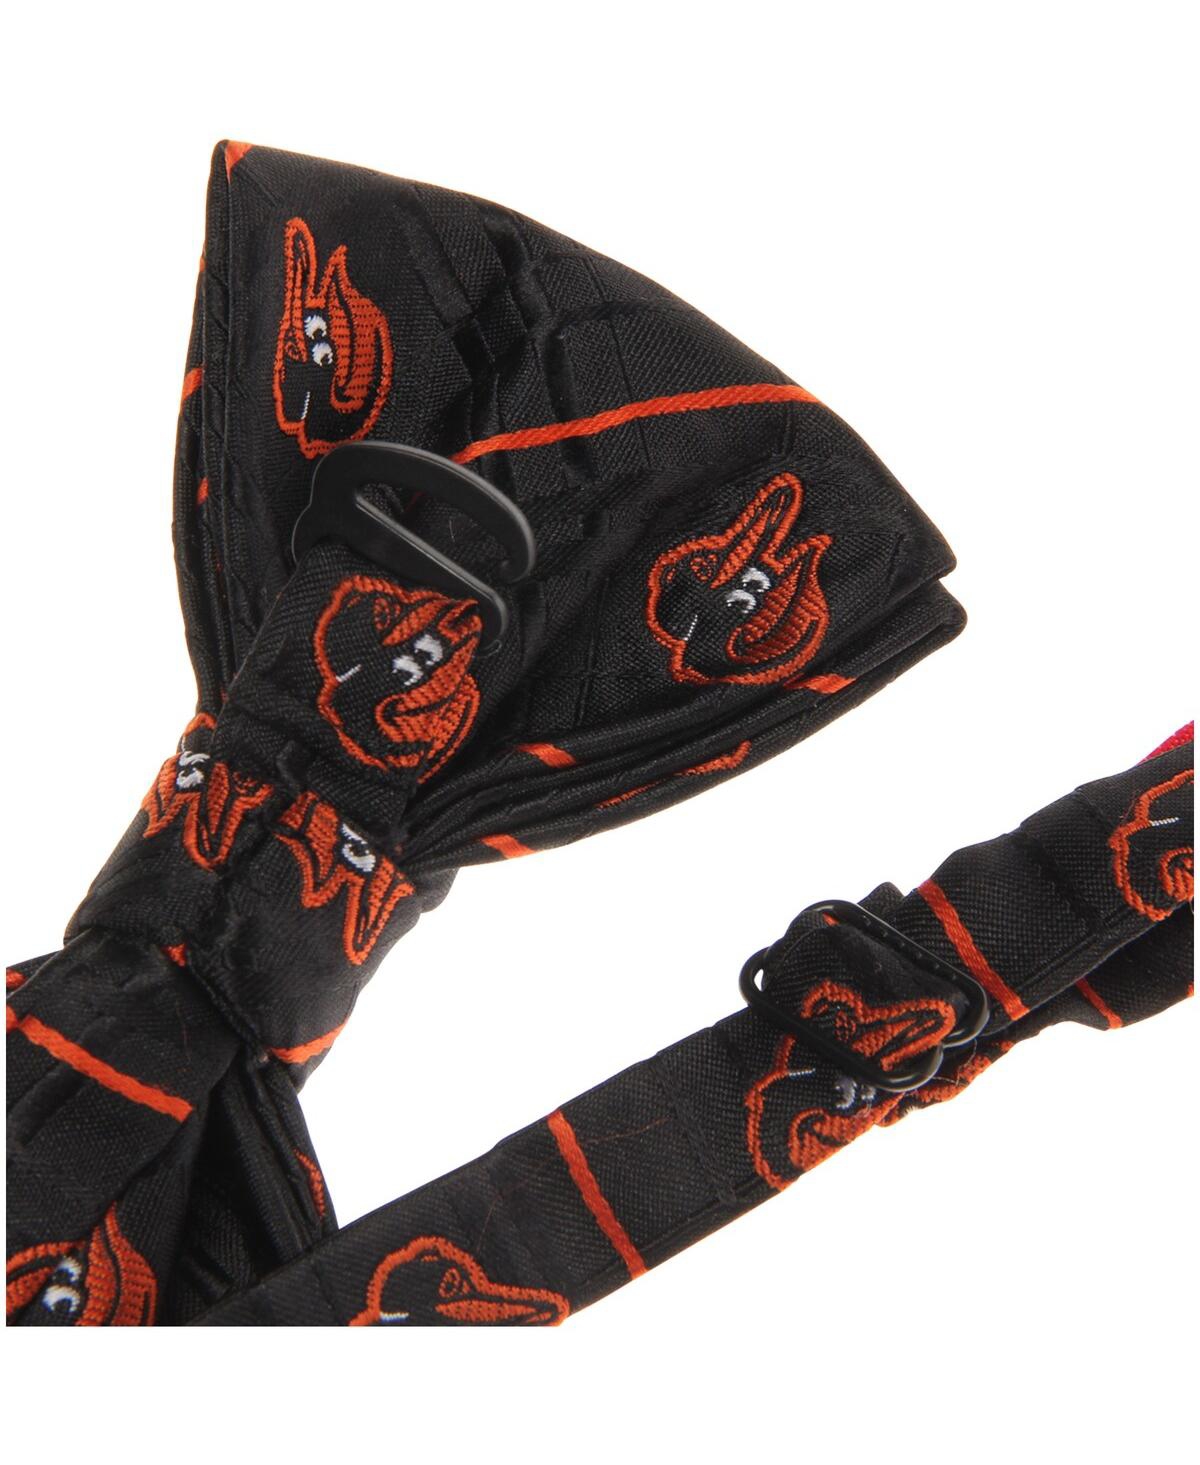 Shop Eagles Wings Men's Black Baltimore Orioles Oxford Bow Tie